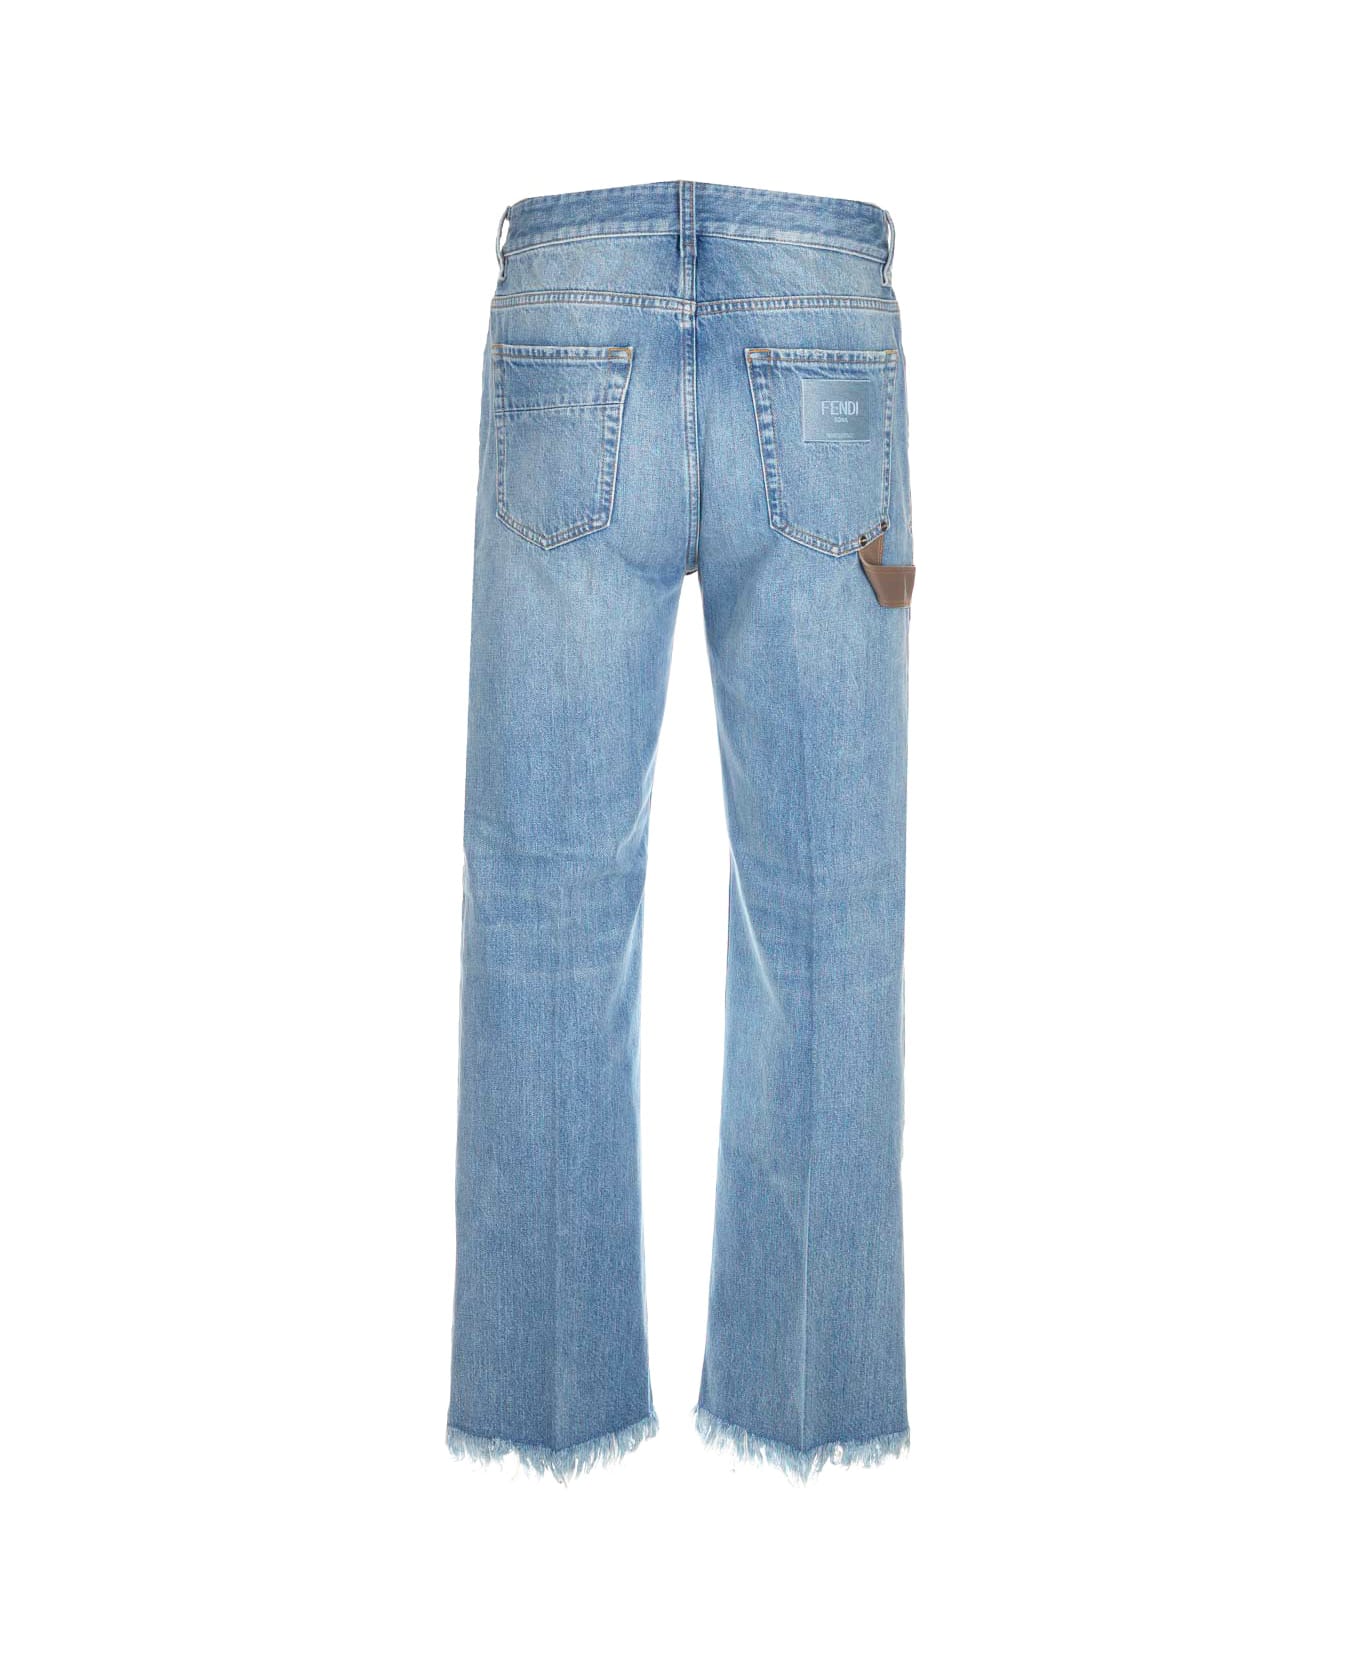 Fendi Light Blue Jeans With Fringes - Blue